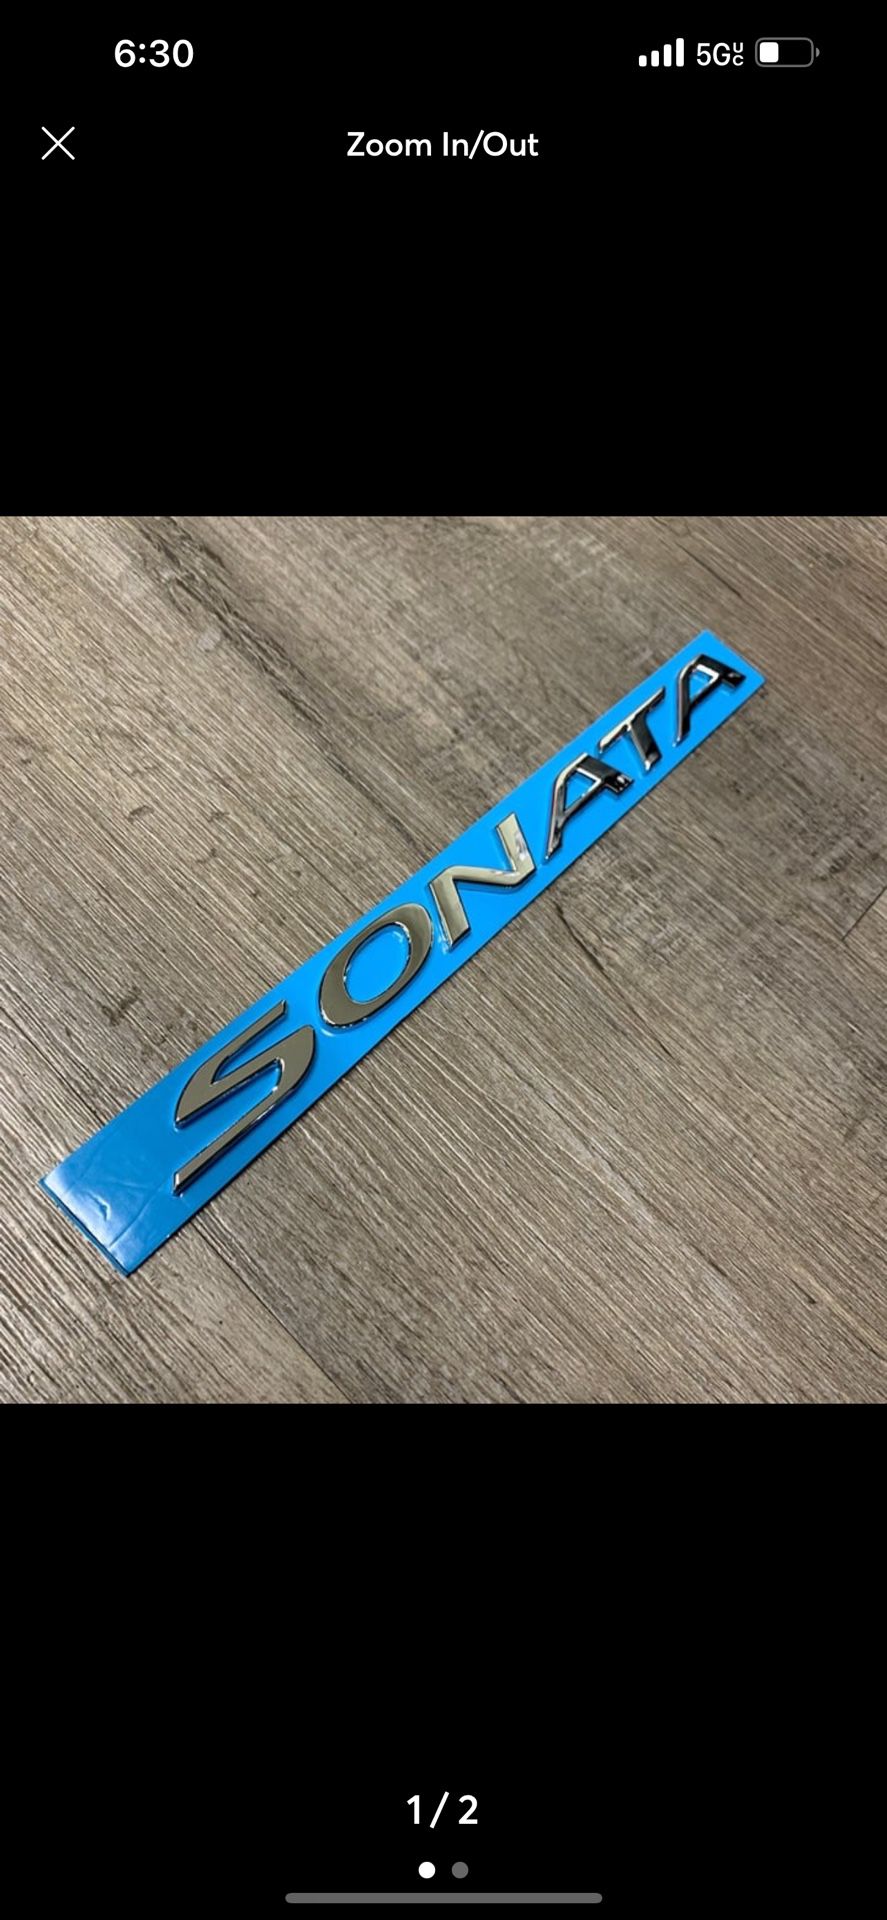 Hyundai Sonata trunk emblem letters badge decal logo rear symbol